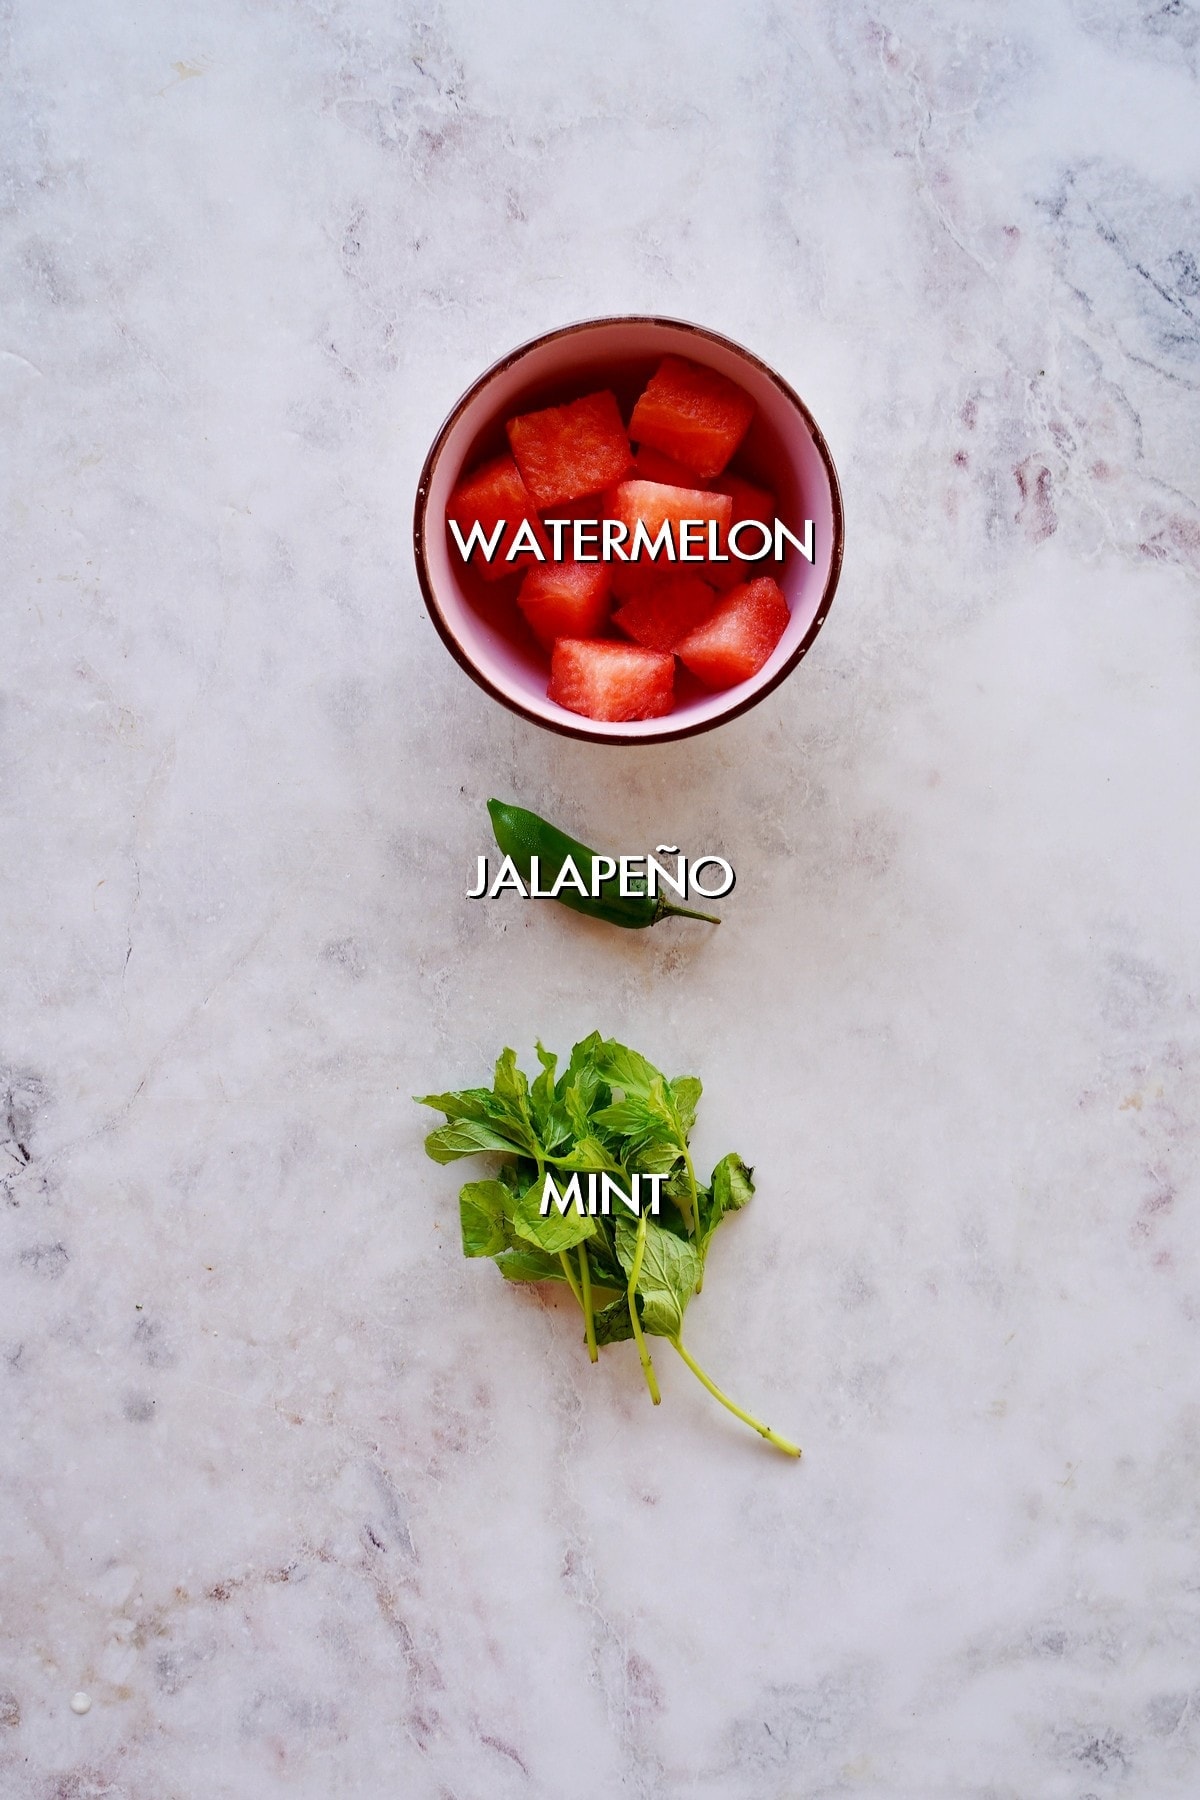 watermelon, jalapeño and mint on white backdrop